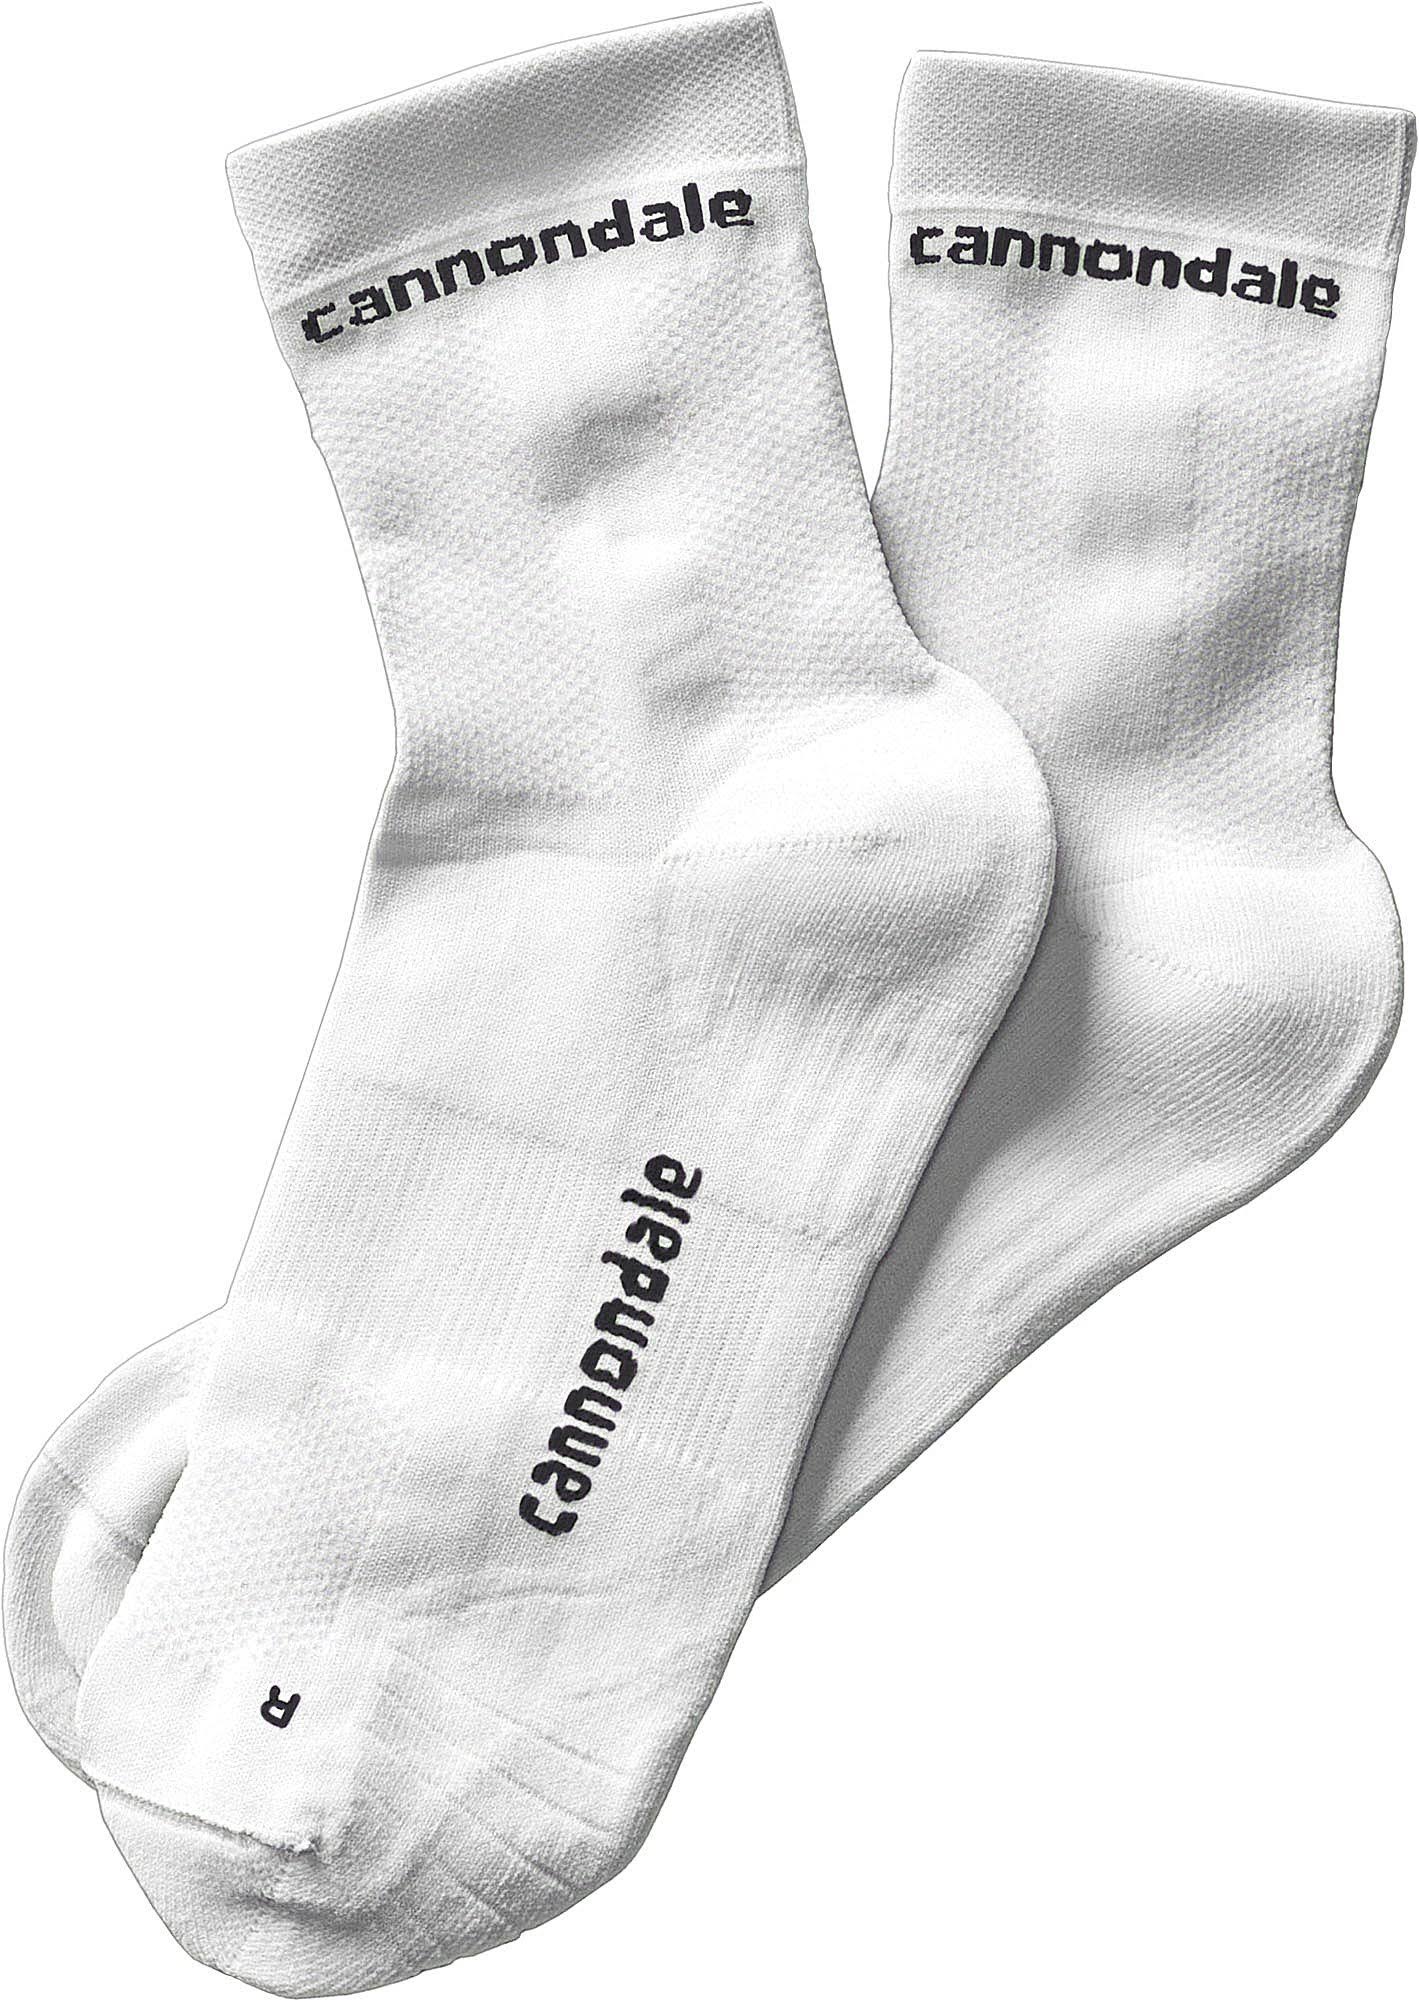 Cannondale Men's Mid Socks